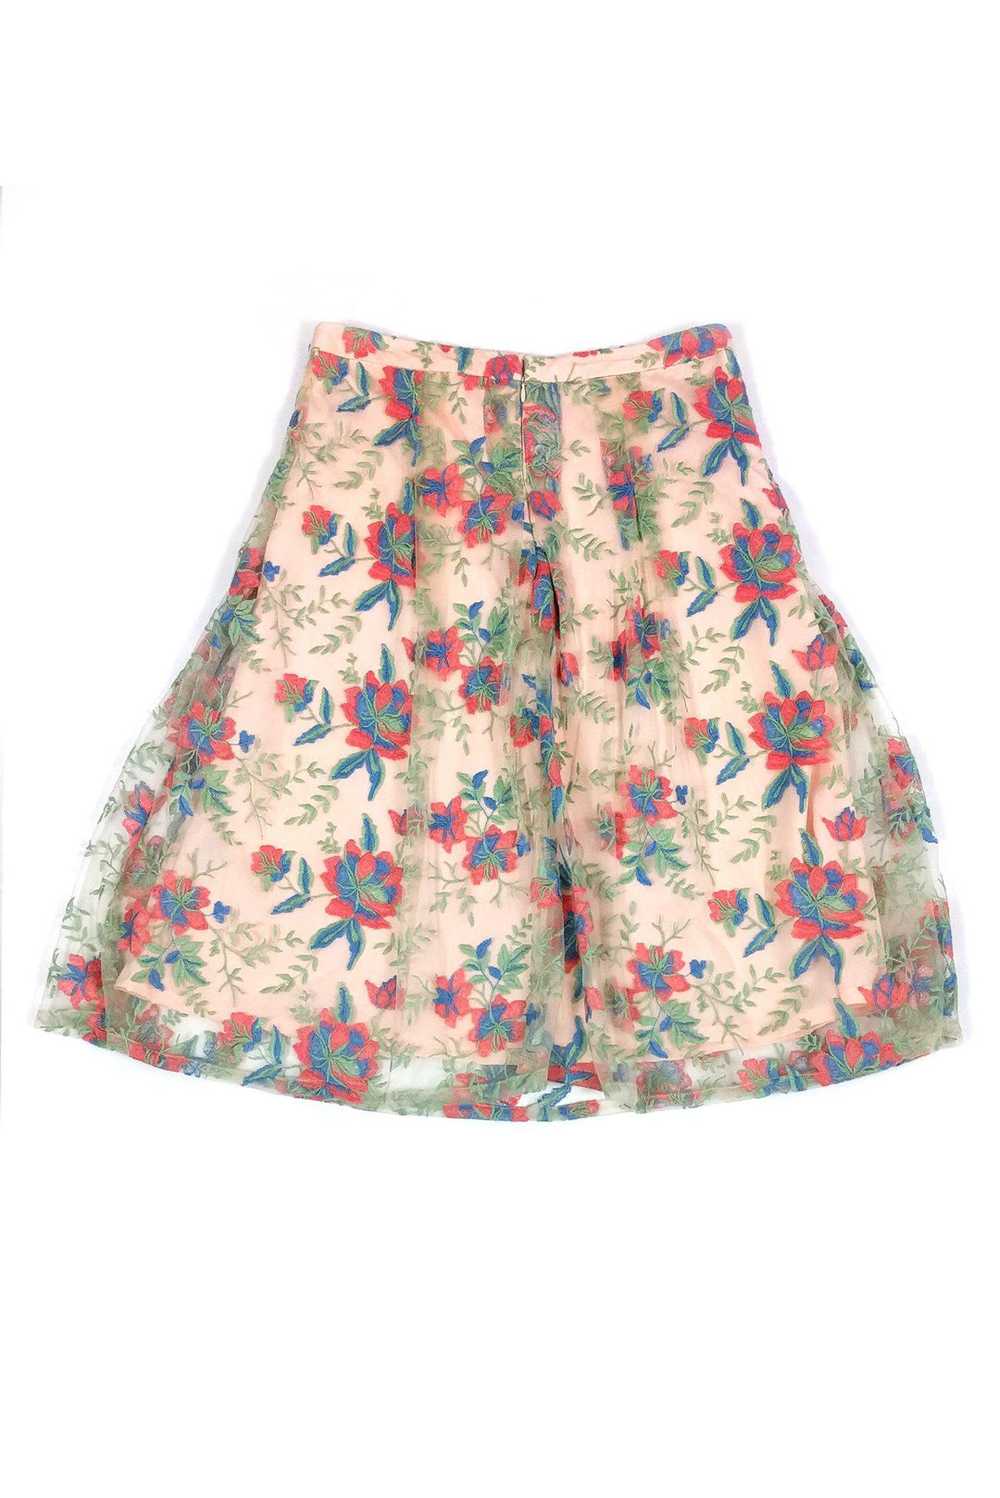 Nanette Lepore - Pink Mesh Embroidered Skirt Sz 4 - image 2